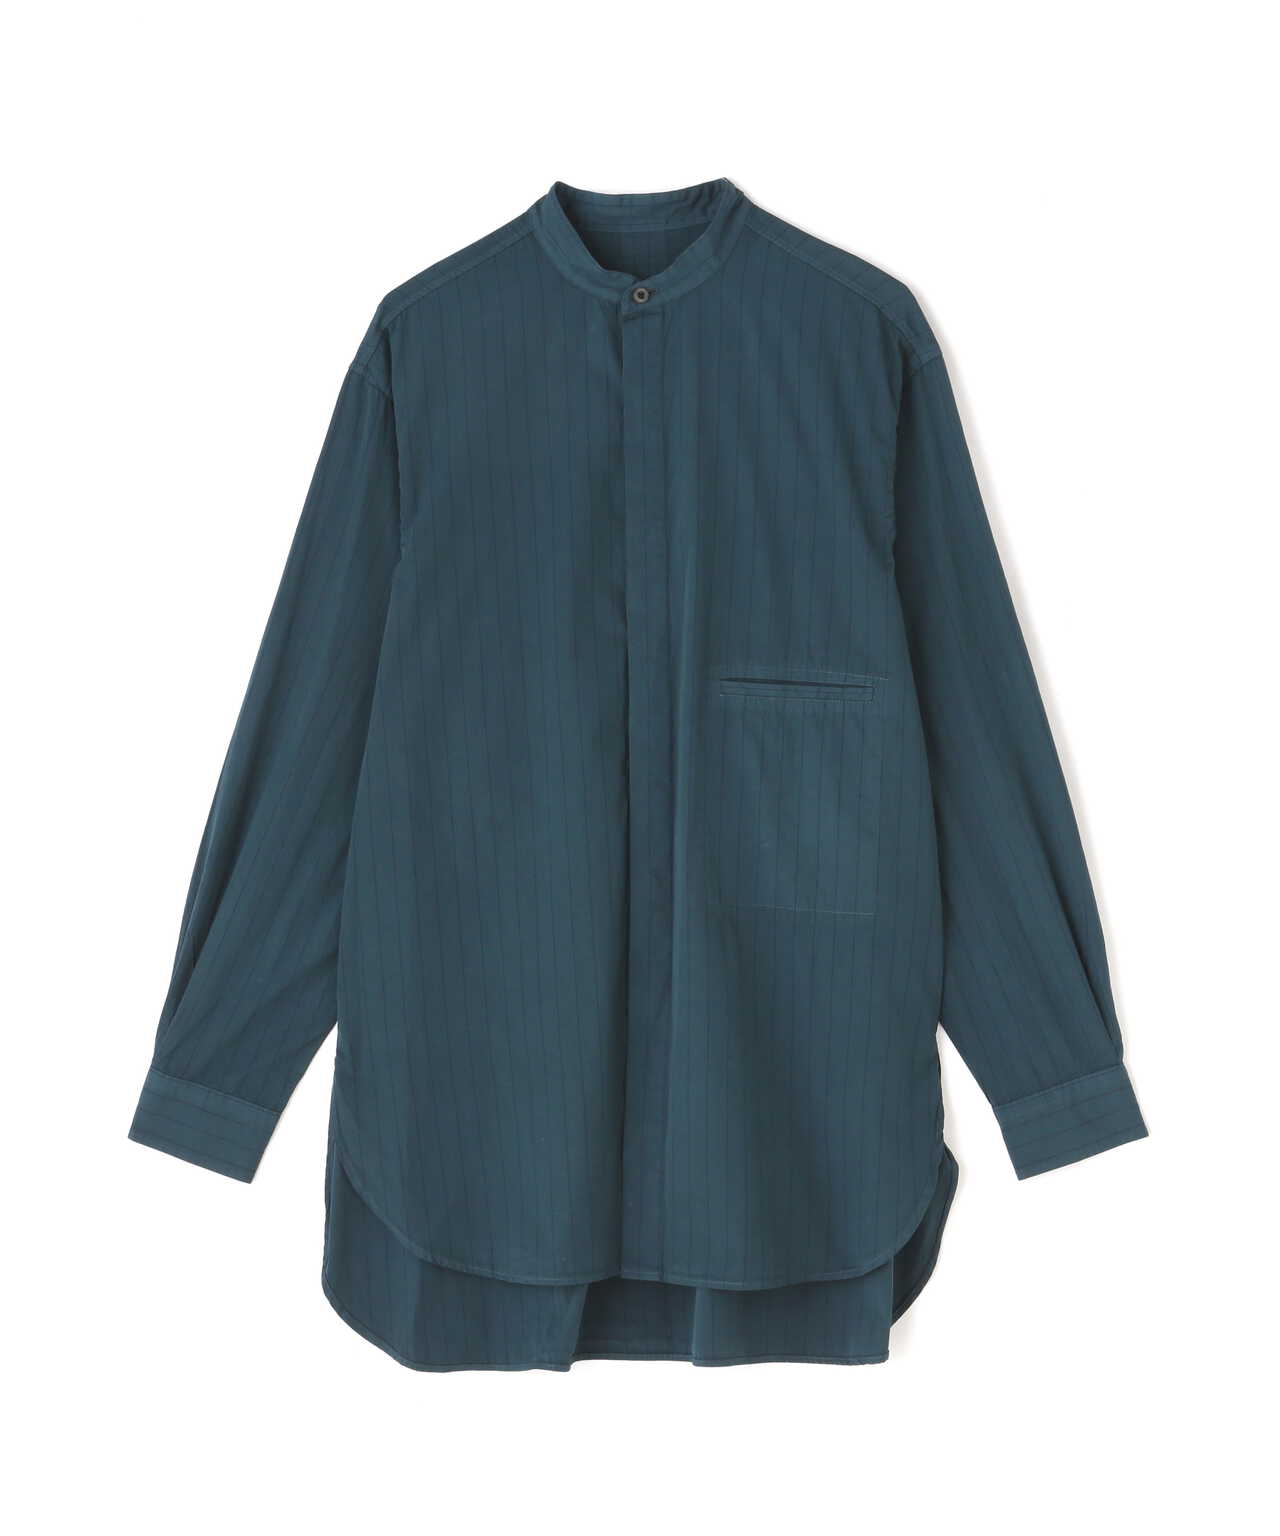 YOKE/ヨーク/Garment Dye Stripe Band Collar Shirt